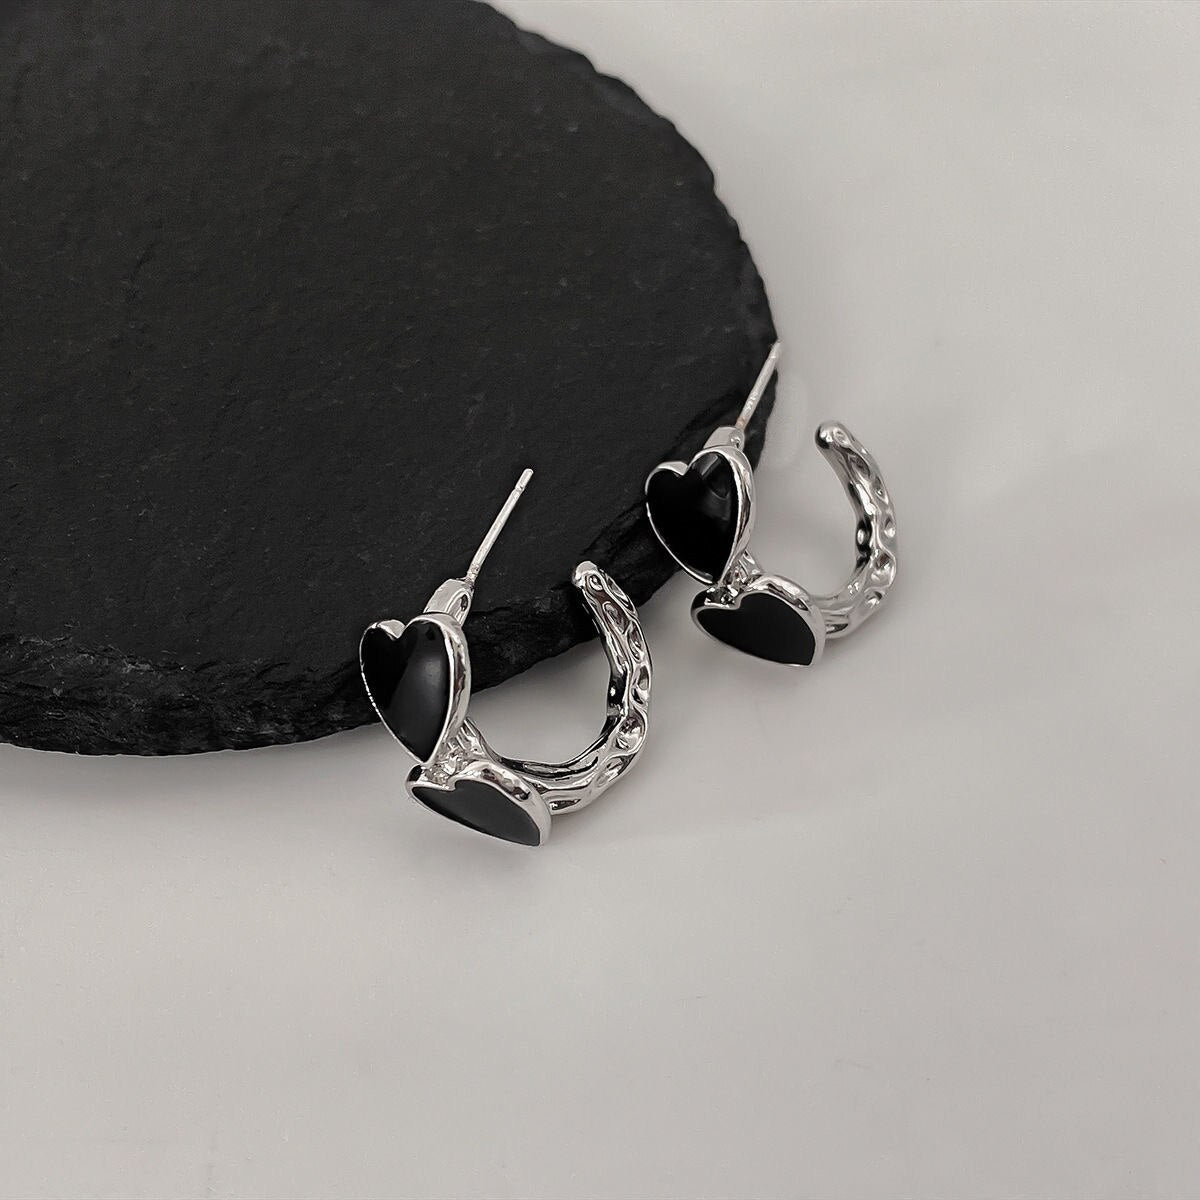 Circle Shell Flower Hoop Earrings For Women Fashion Sweet Metal Jewelry Oorbellen Gift - Charlie Dolly